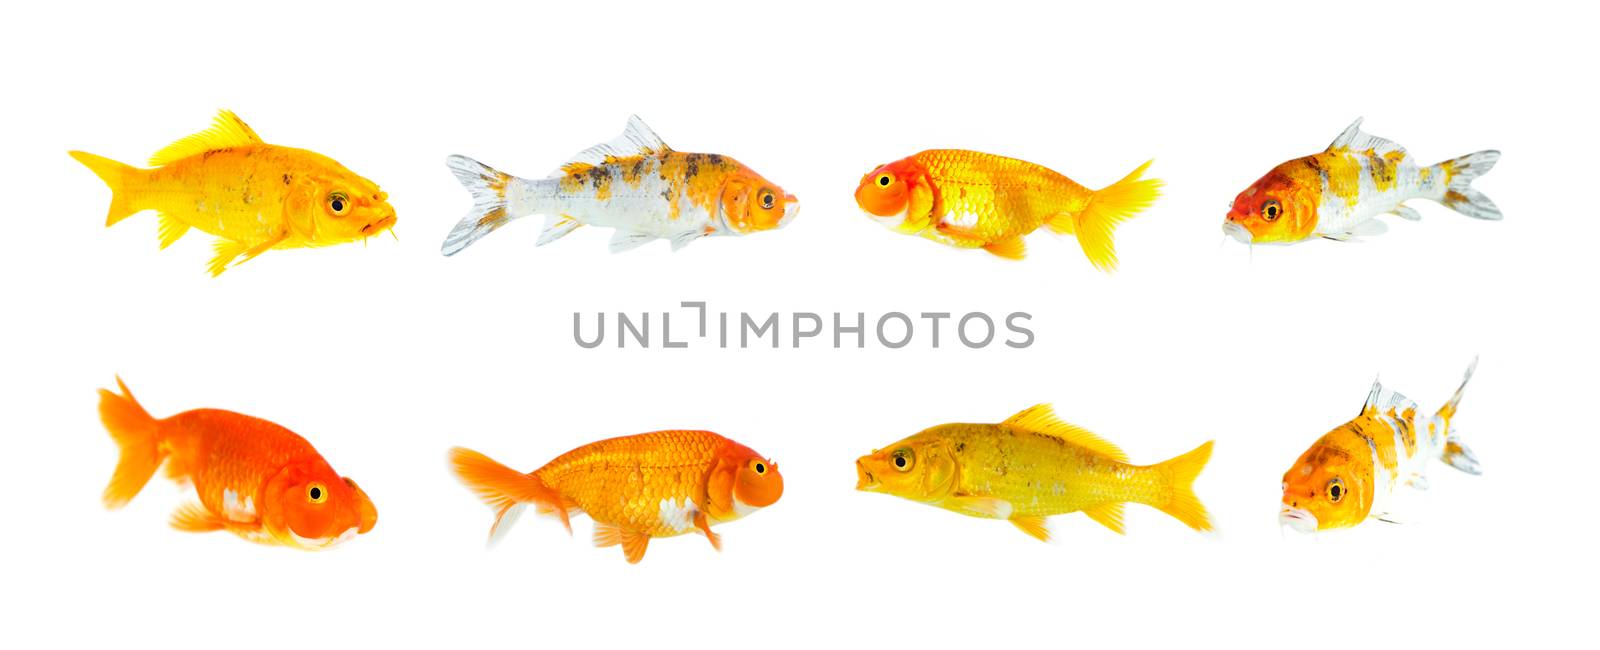 Group of goldfish and koi fish and bubble eye goldfish isolated on a white background. Animal. Pet. by yod67